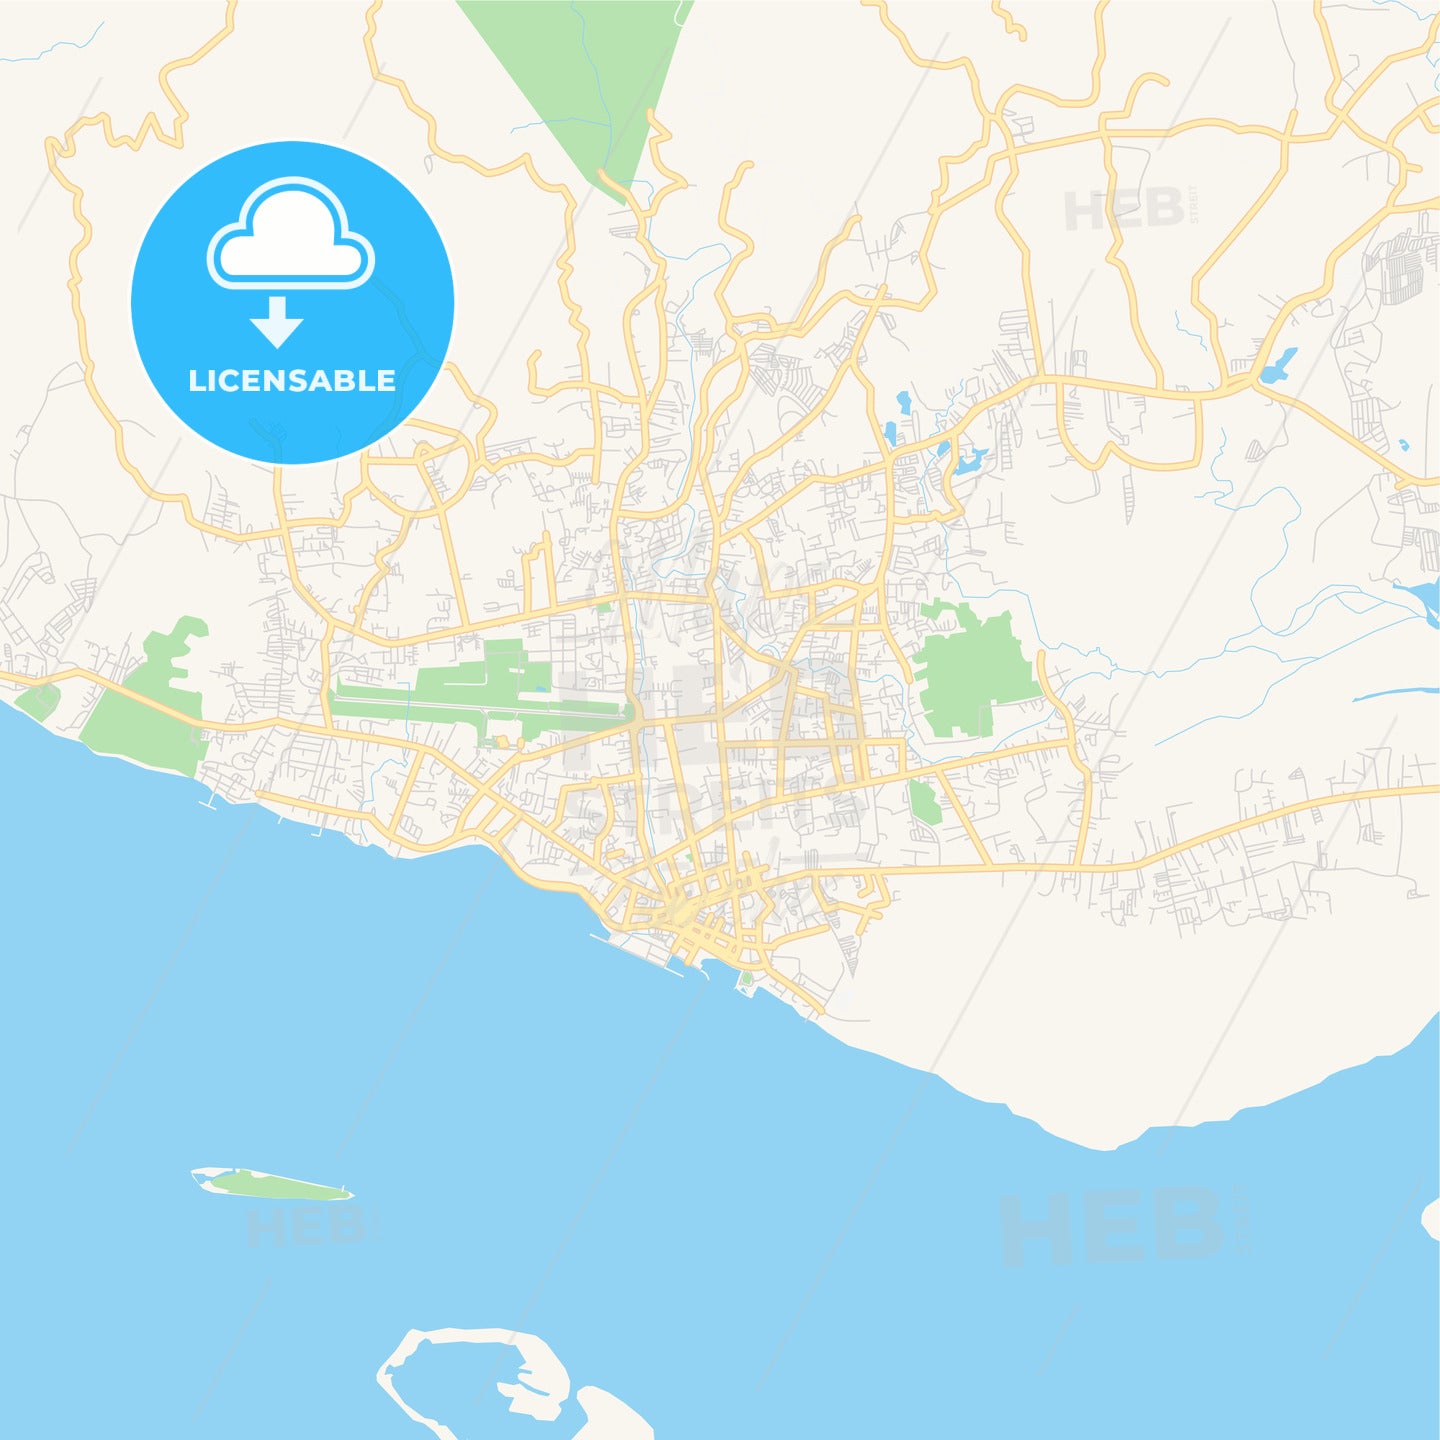 Printable street map of Zamboanga City, Philippines